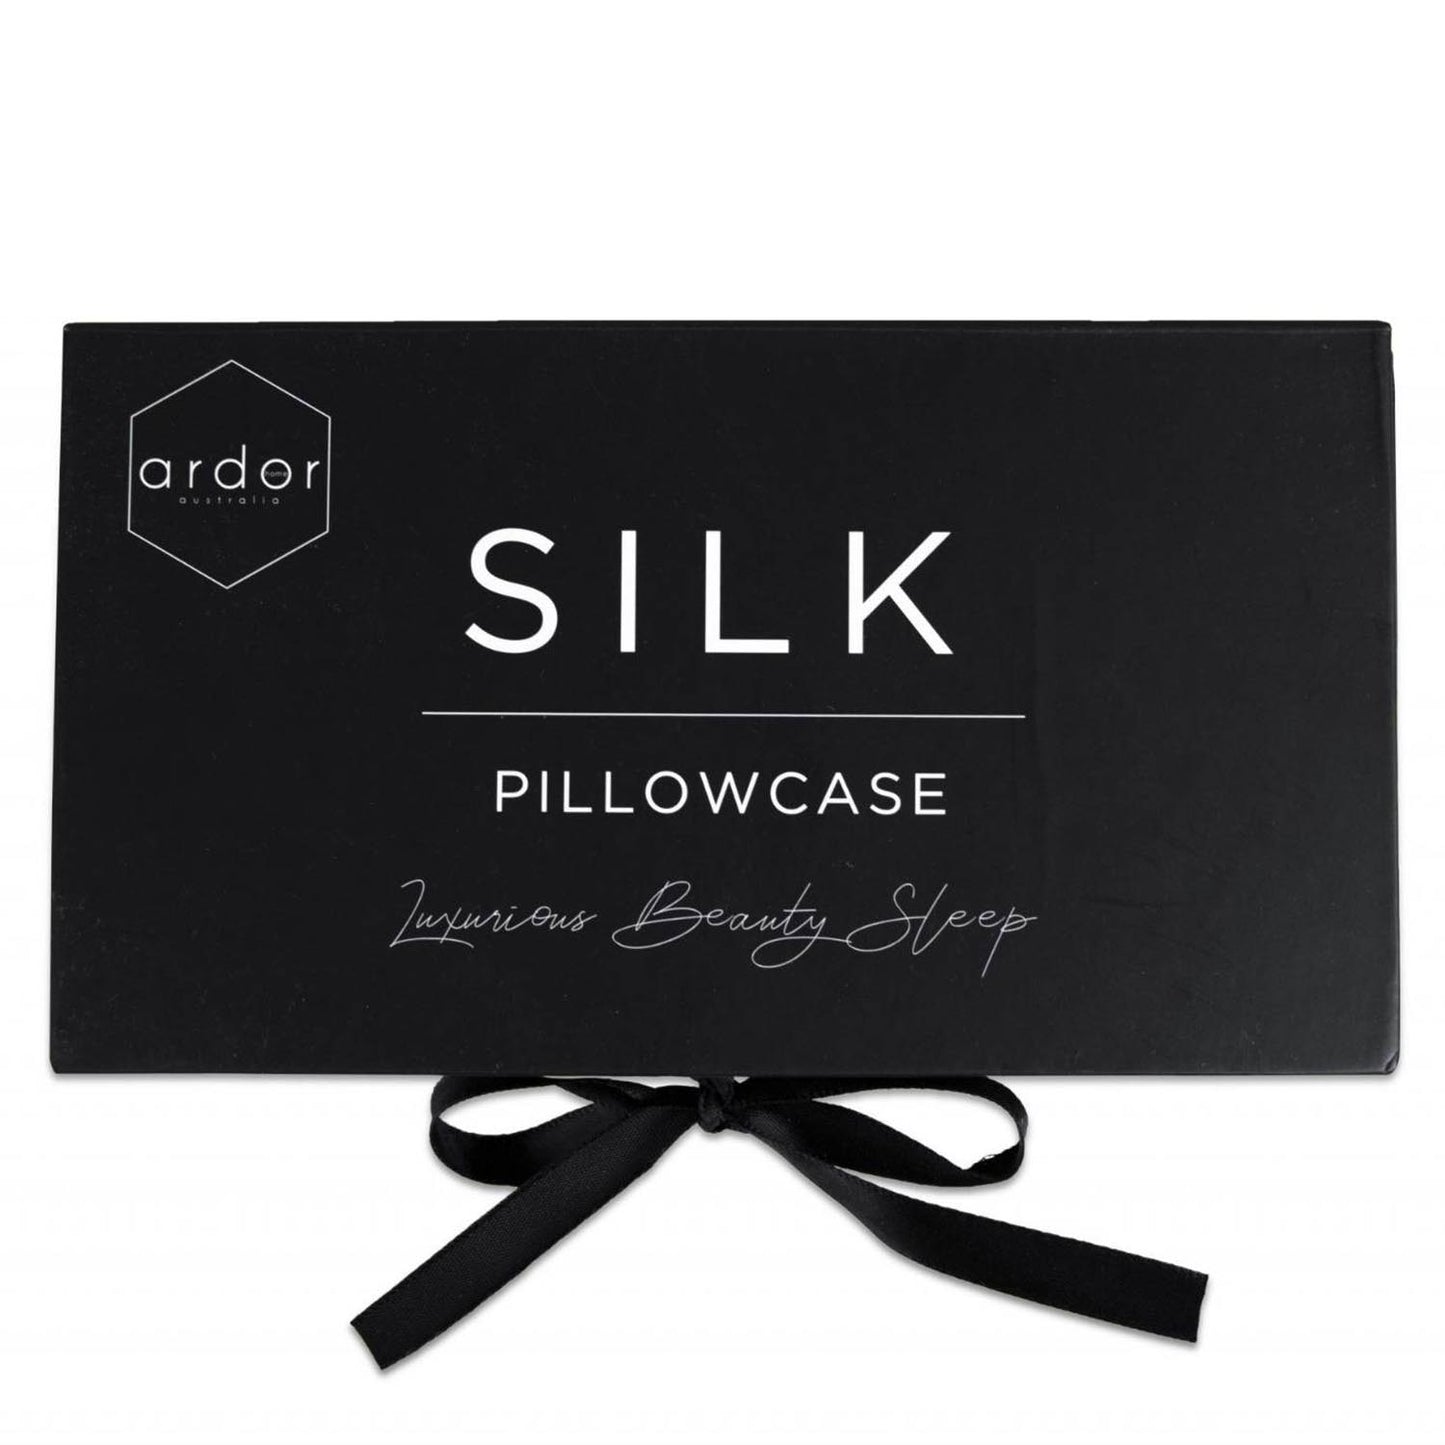 Mulberry Silk Pillowcase- Ivory Dreams by Ardor